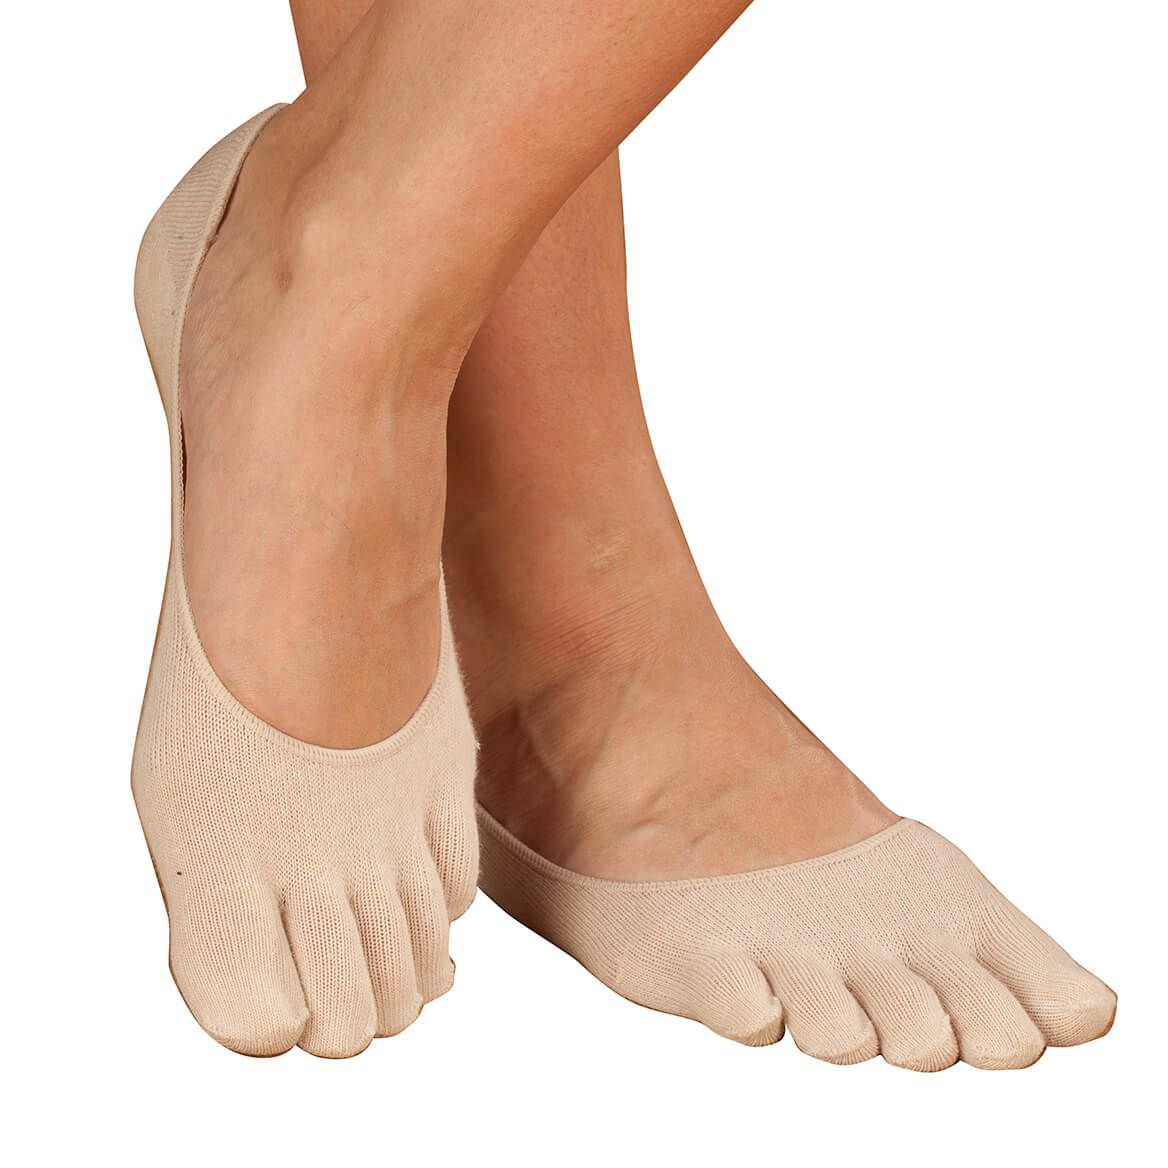 5 Pairs Toe Separator Socks Foot Alignment Socks with Toe